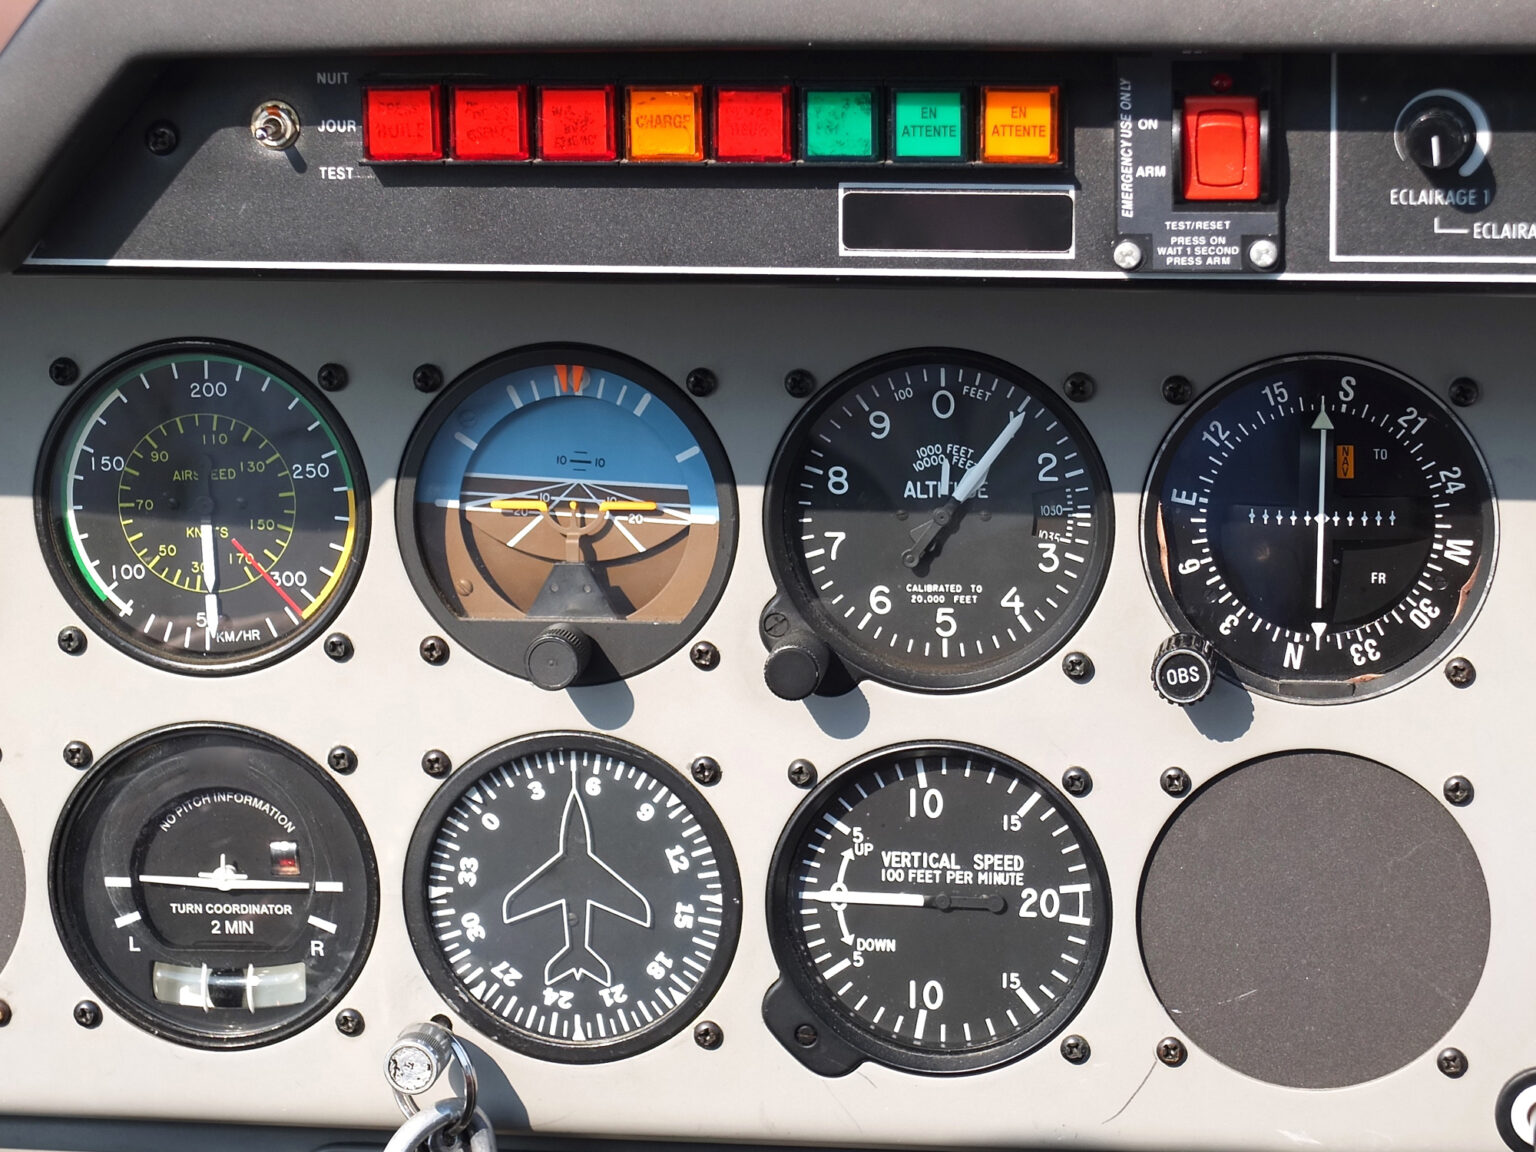 A basic instrument panel of an aircraft